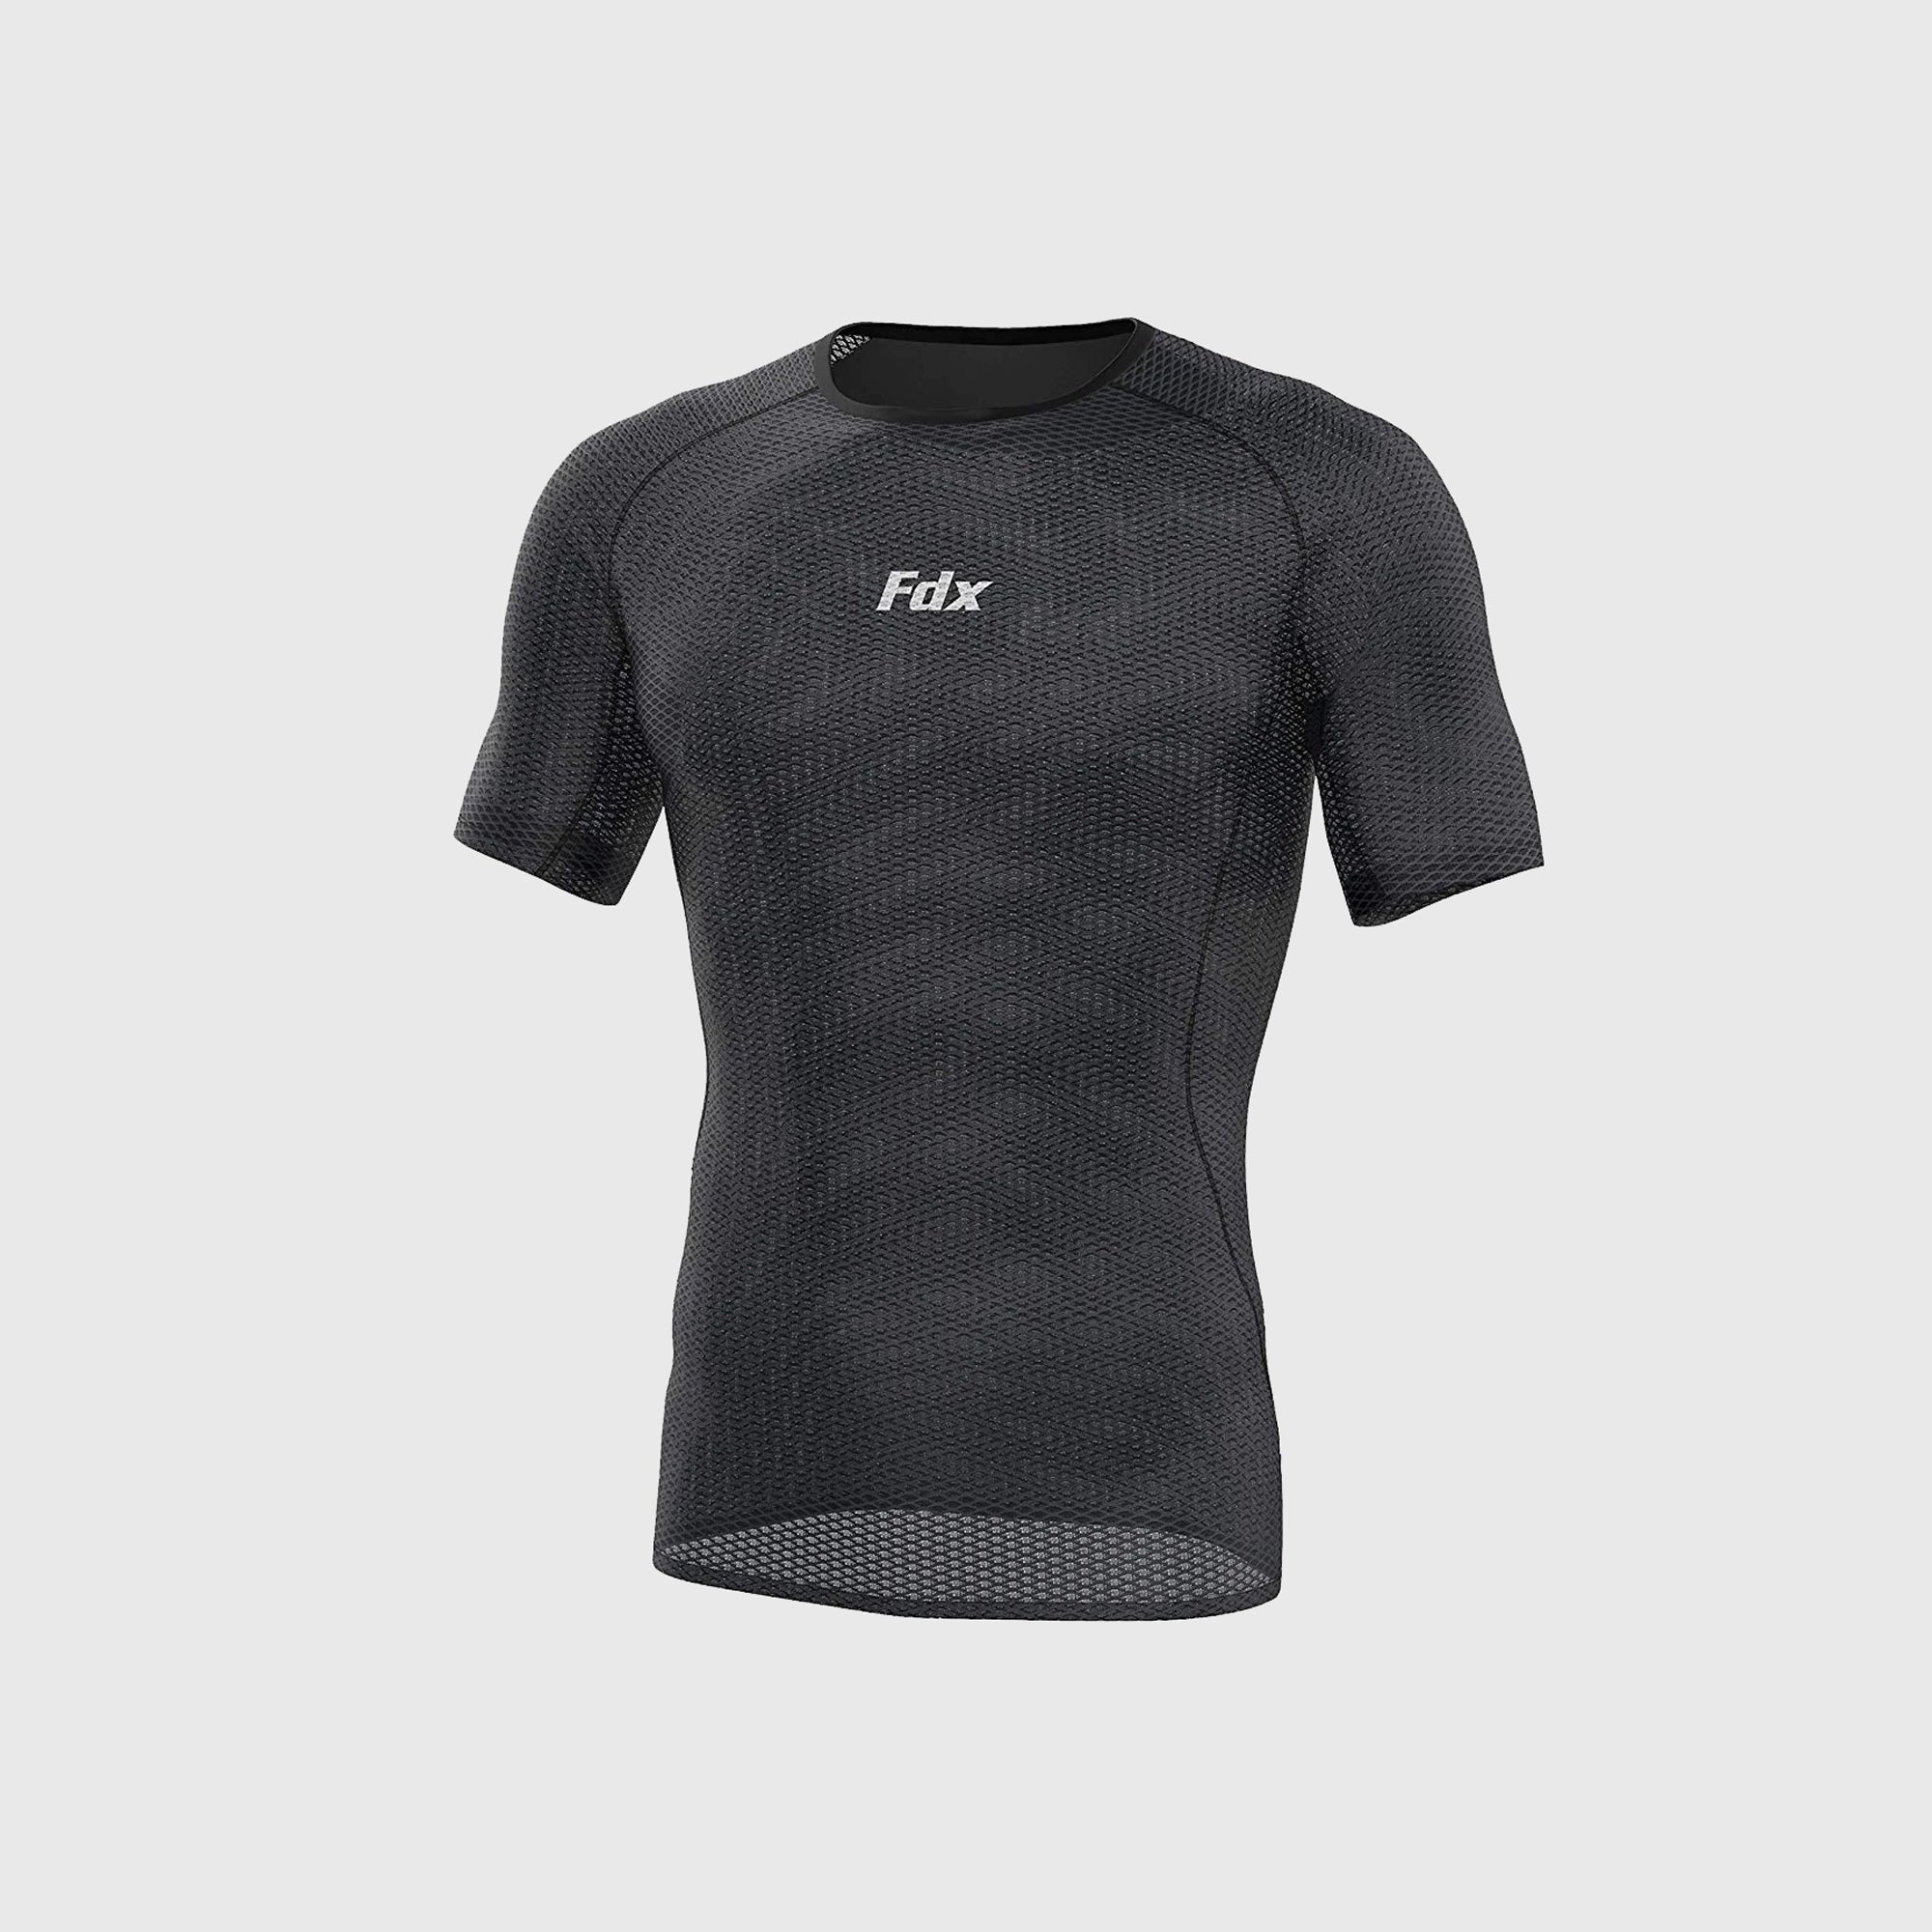 Fdx Mens Black Short Sleeve Mesh Compression Top Running Gym Workout Wear Rash Guard Stretchable Breathable - Aeroform